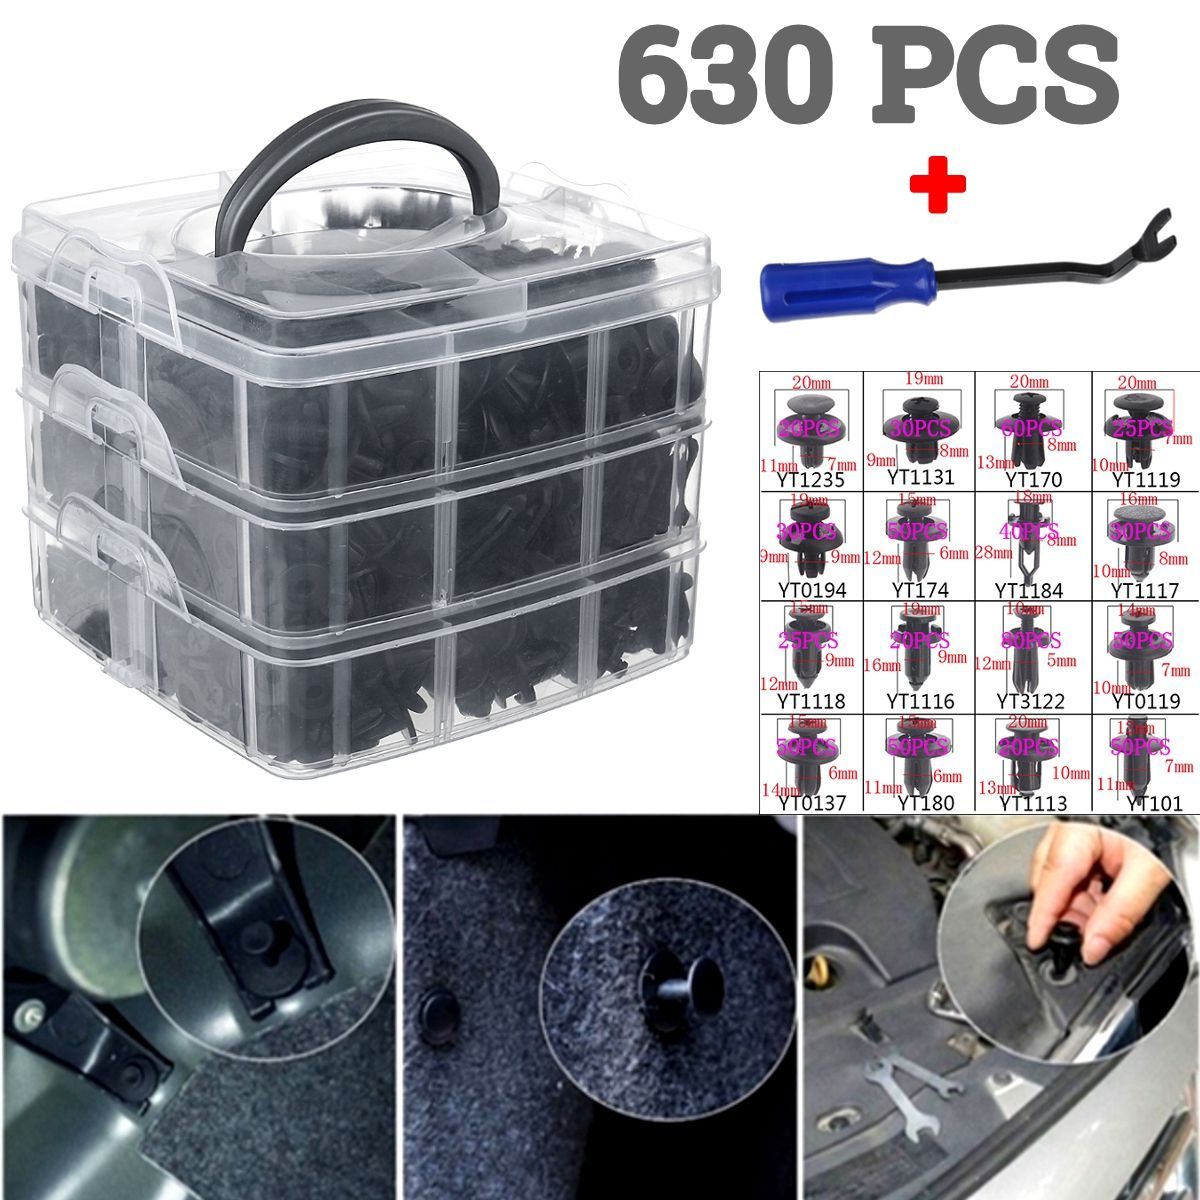 630Pcs-Set-16-Kinds-With-Spanner-Plastic-Car-Body-Push-Pin-Rivets-Bumper-Repair-Kits-Fastener-Expans-1596579